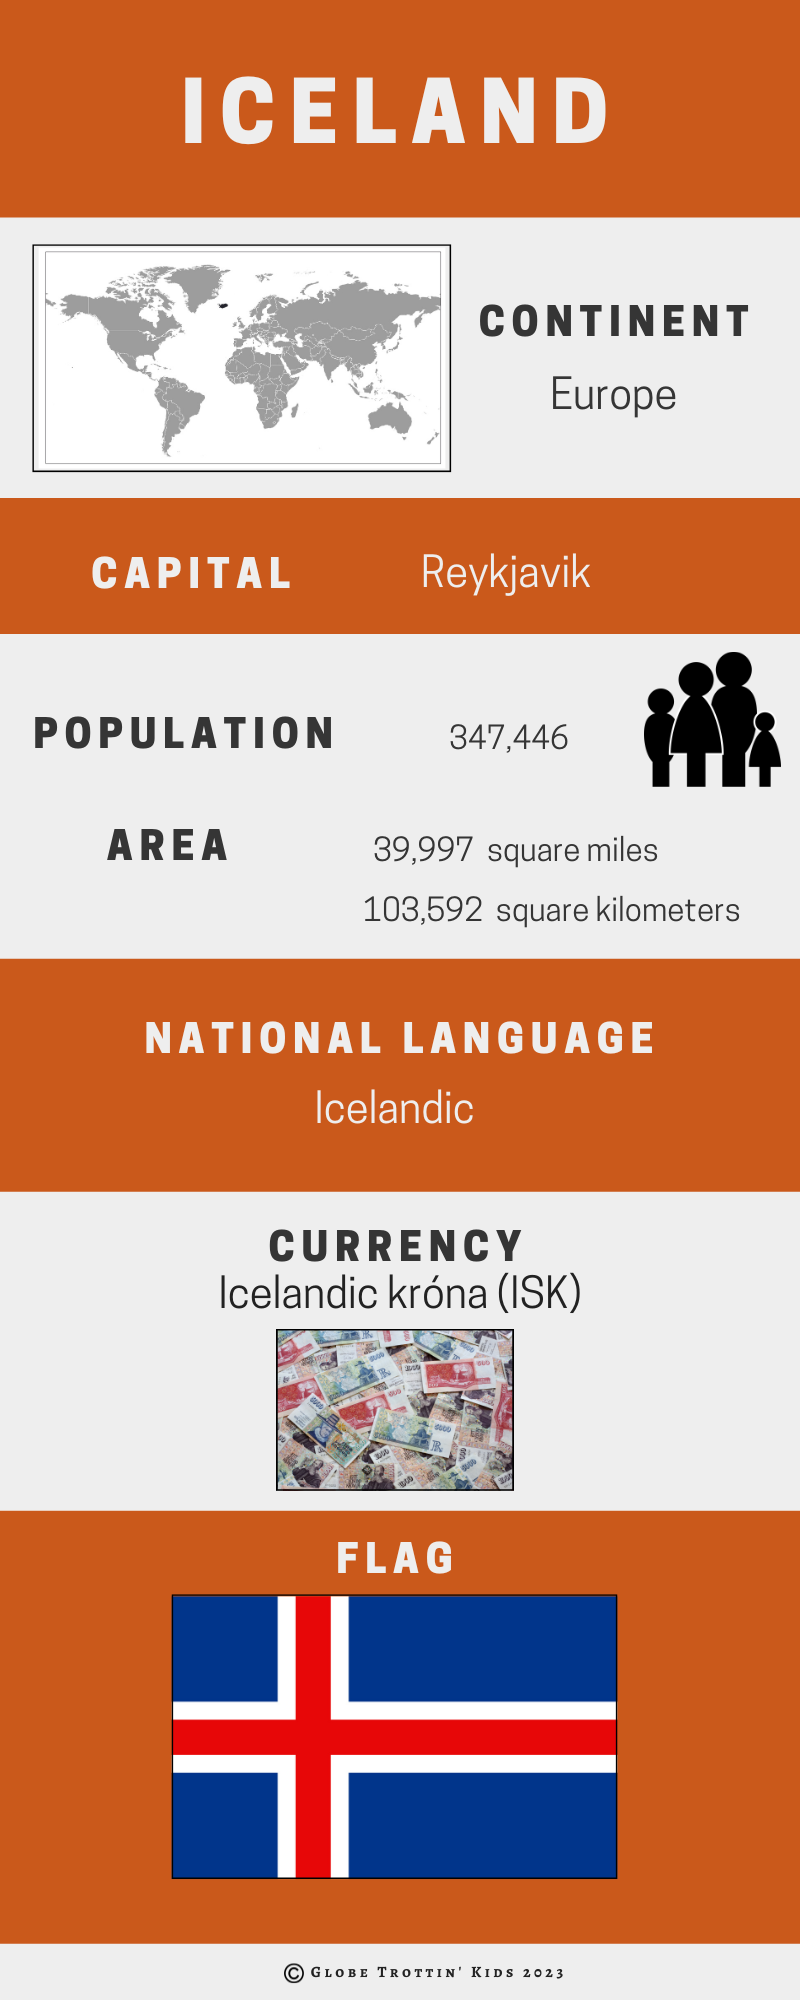 Iceland-infographic